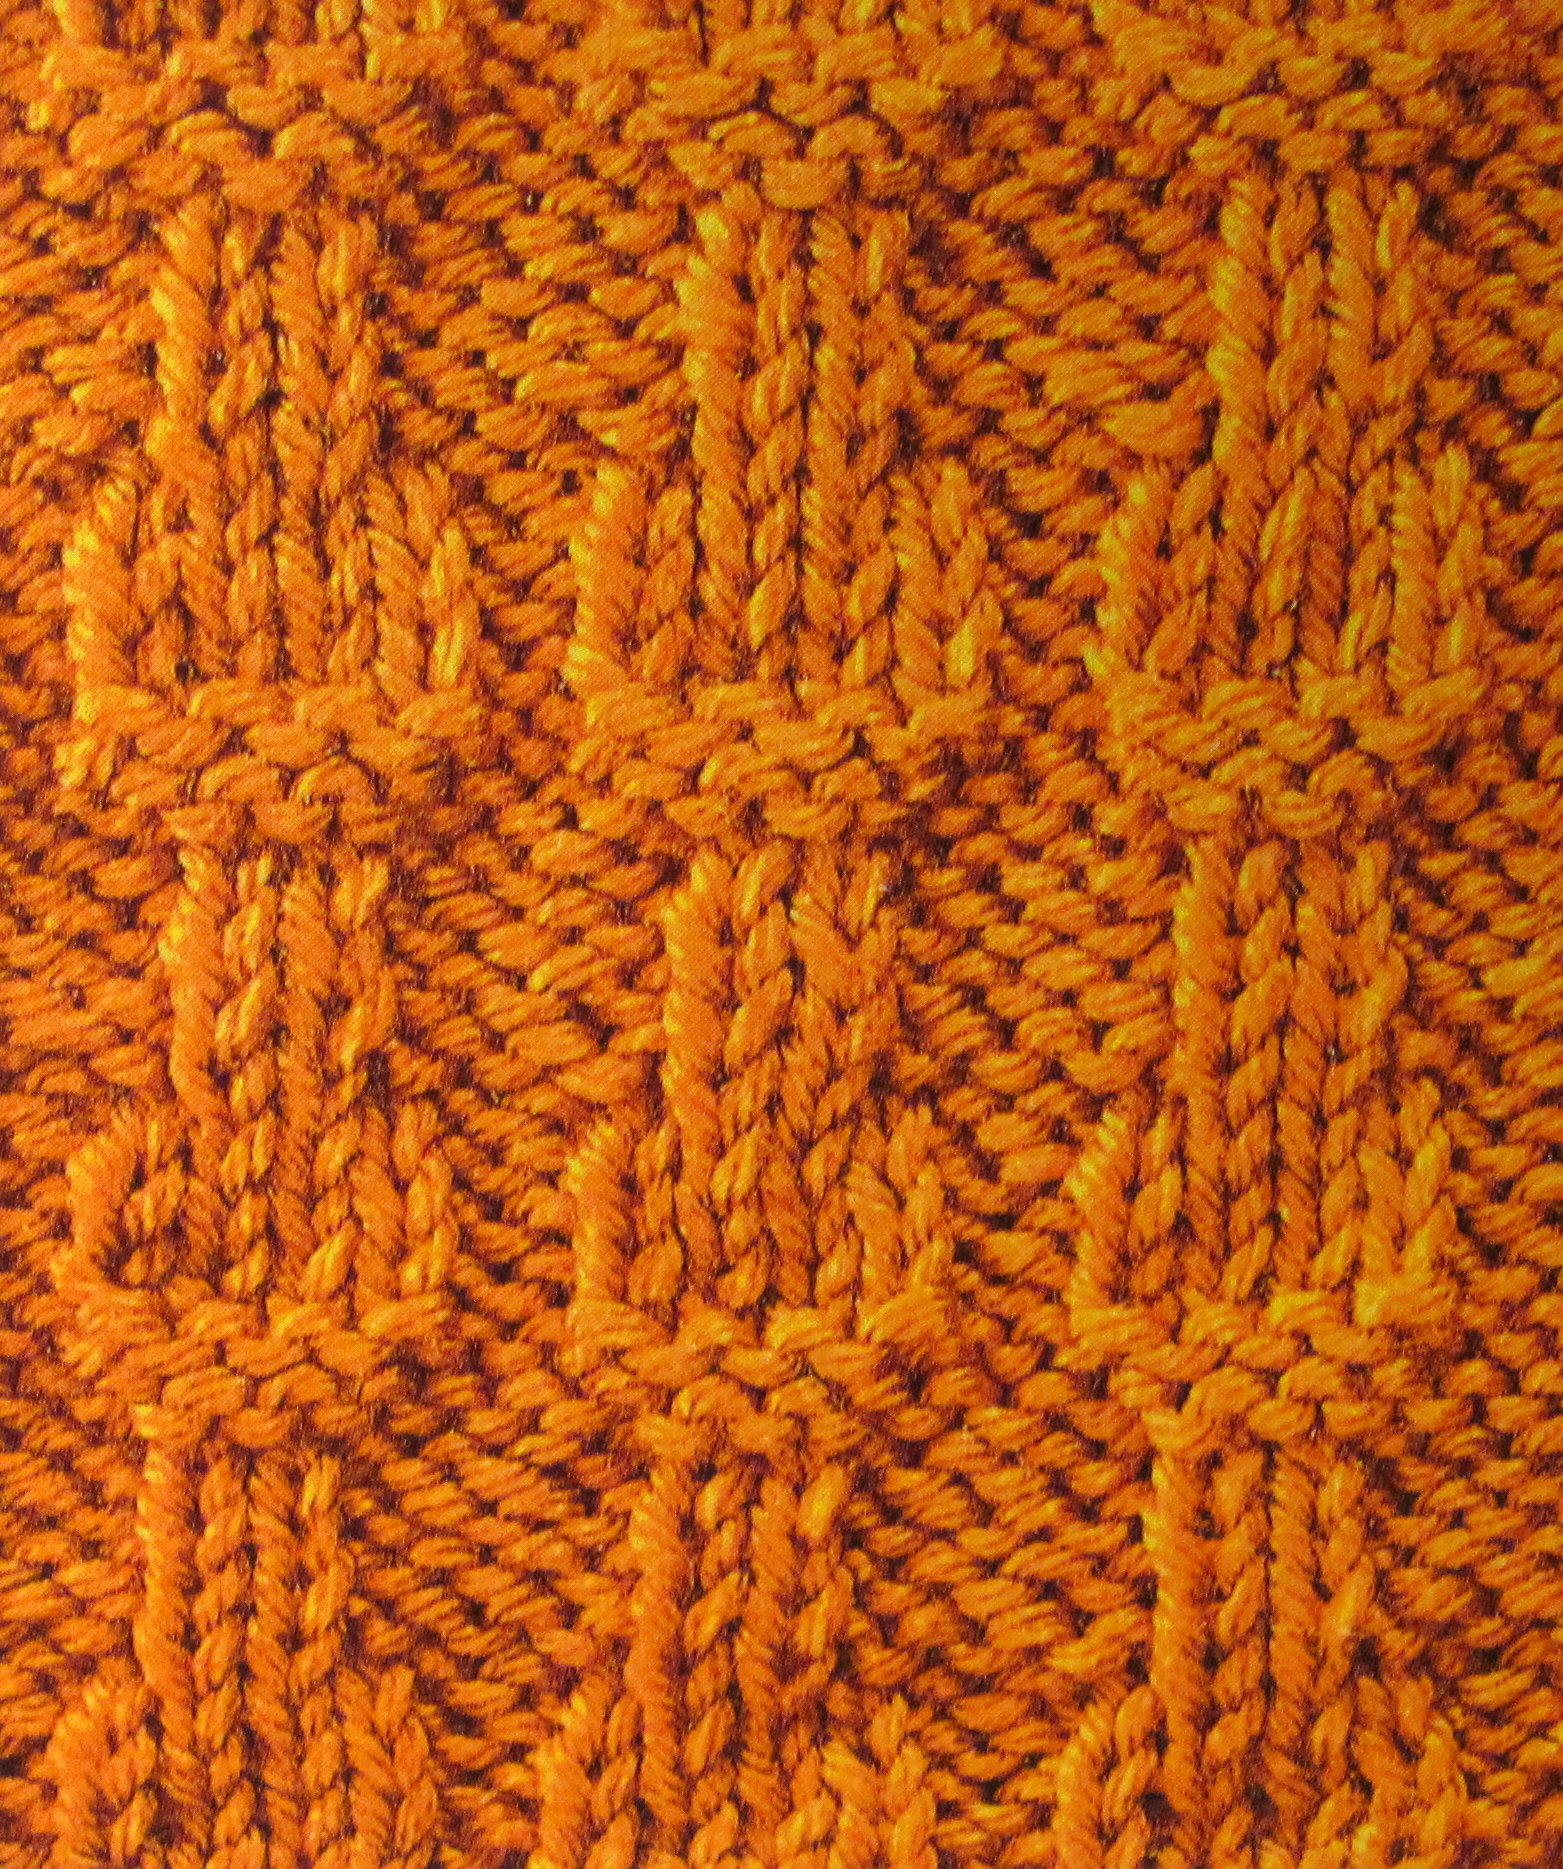 Organ Pipes Stitch | Loom knitting, Knitting stitches, Stitch